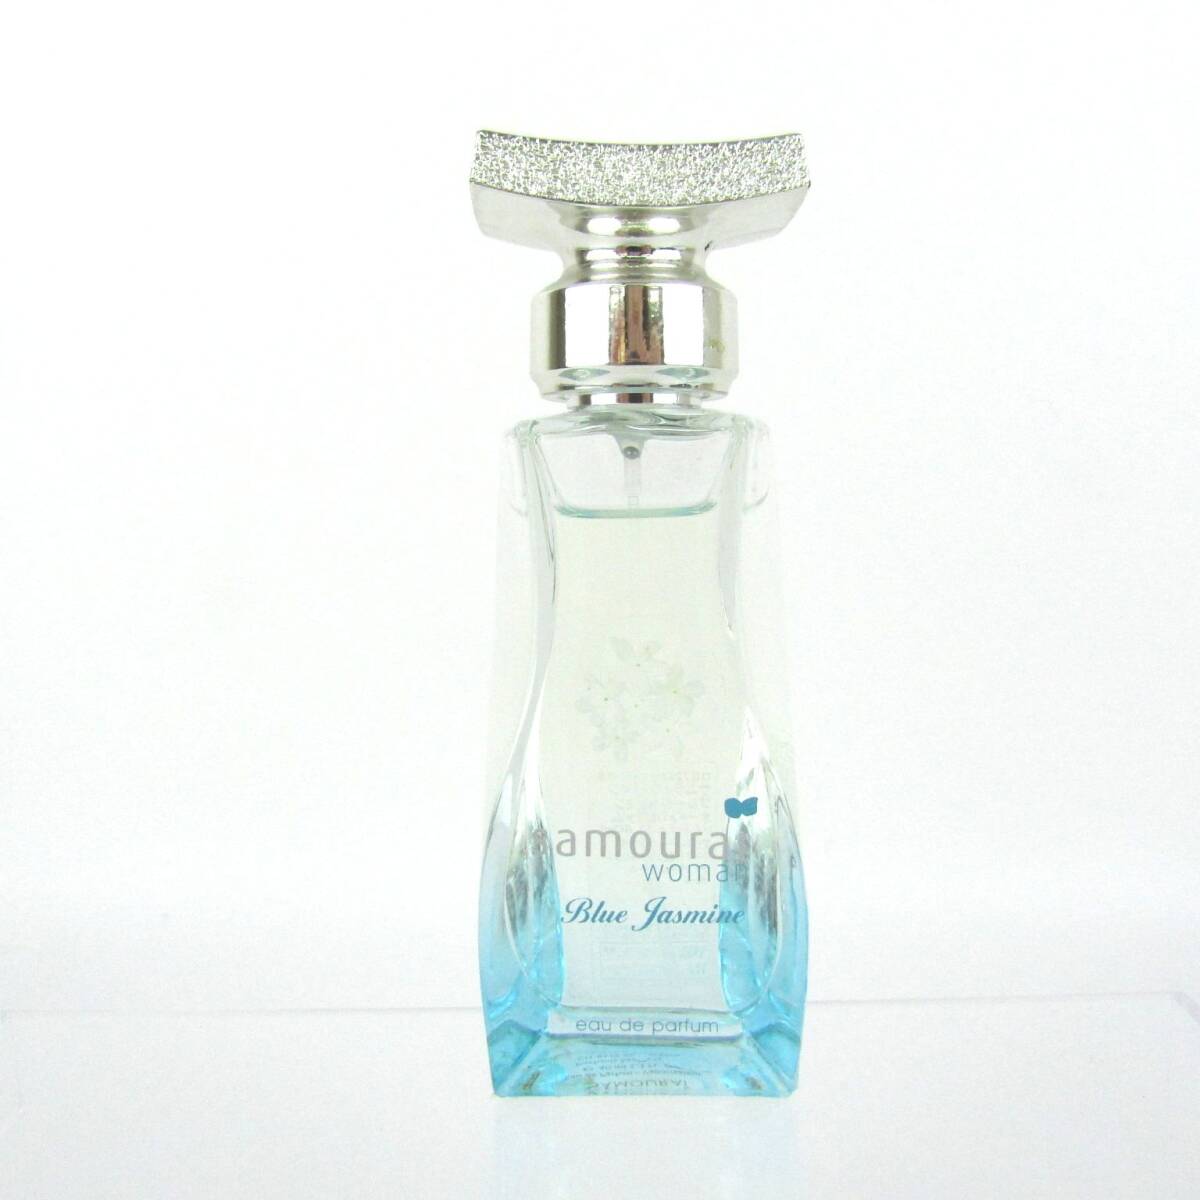  Alain Delon perfume Samurai u- man blue jasmine o-do Pal famEDP somewhat use CO lady's 40ml size ALAIN DELON